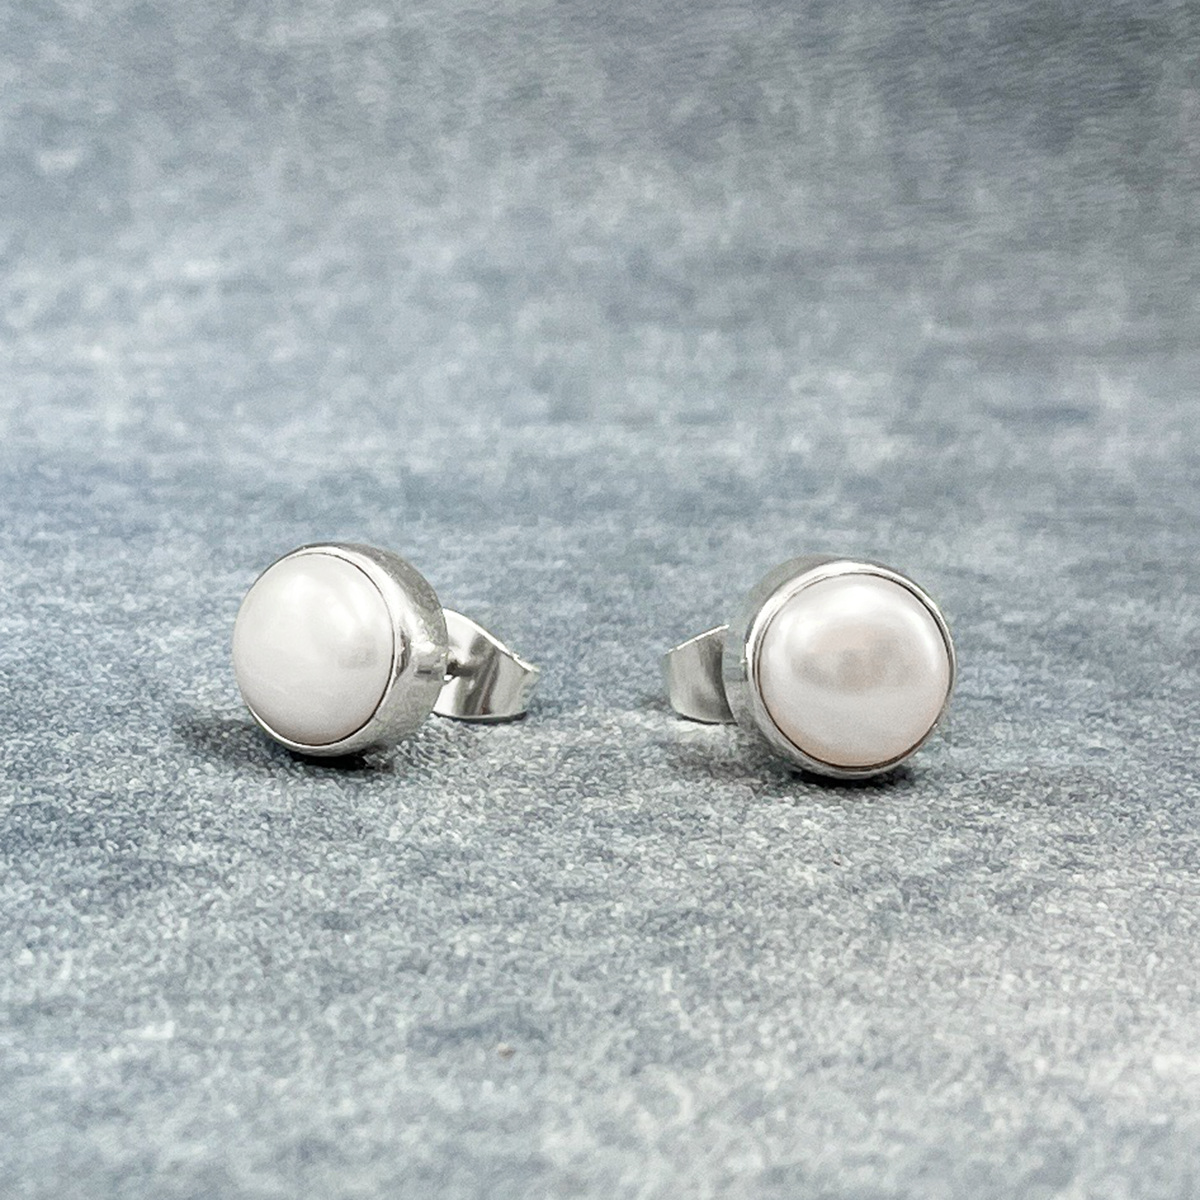 Pearla - Mounted White Pearl Silver Earrings - Stud